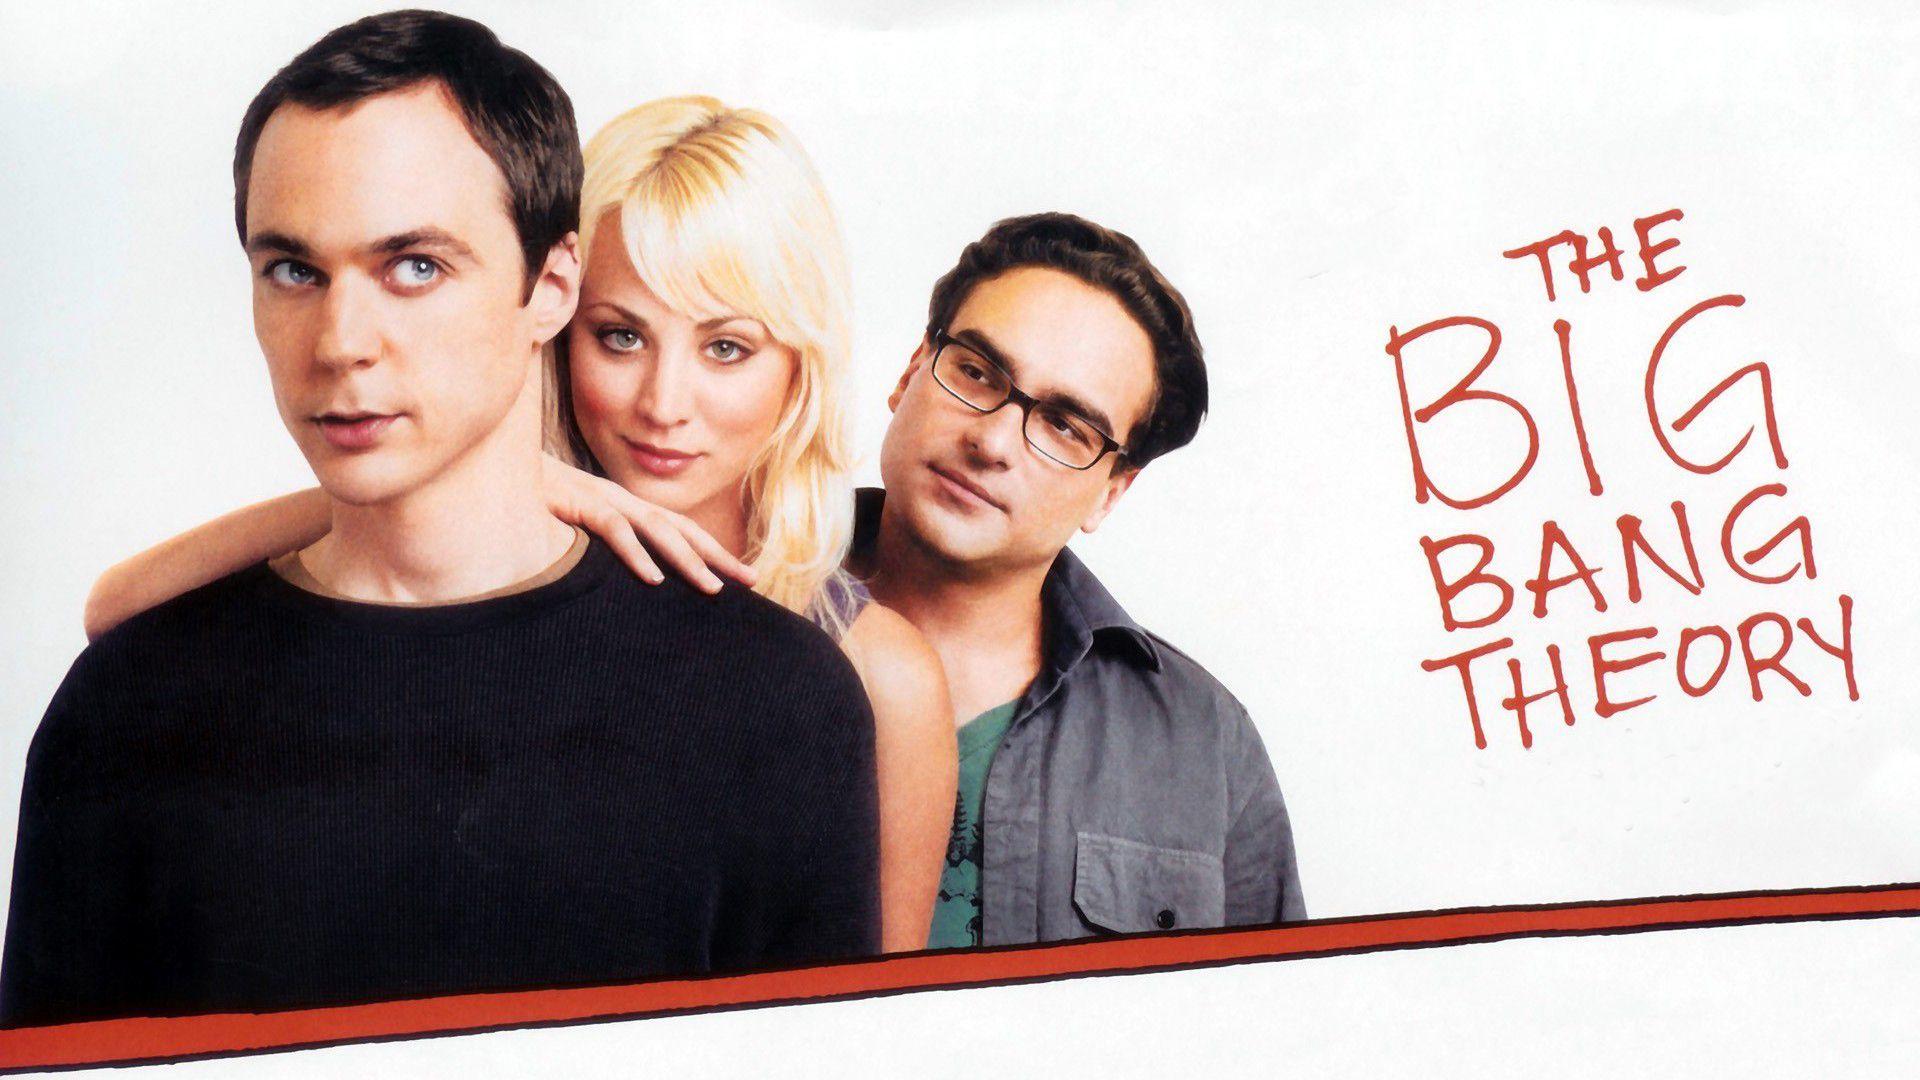 Big Bang Theory 1920x1080, High Definition, High Quality